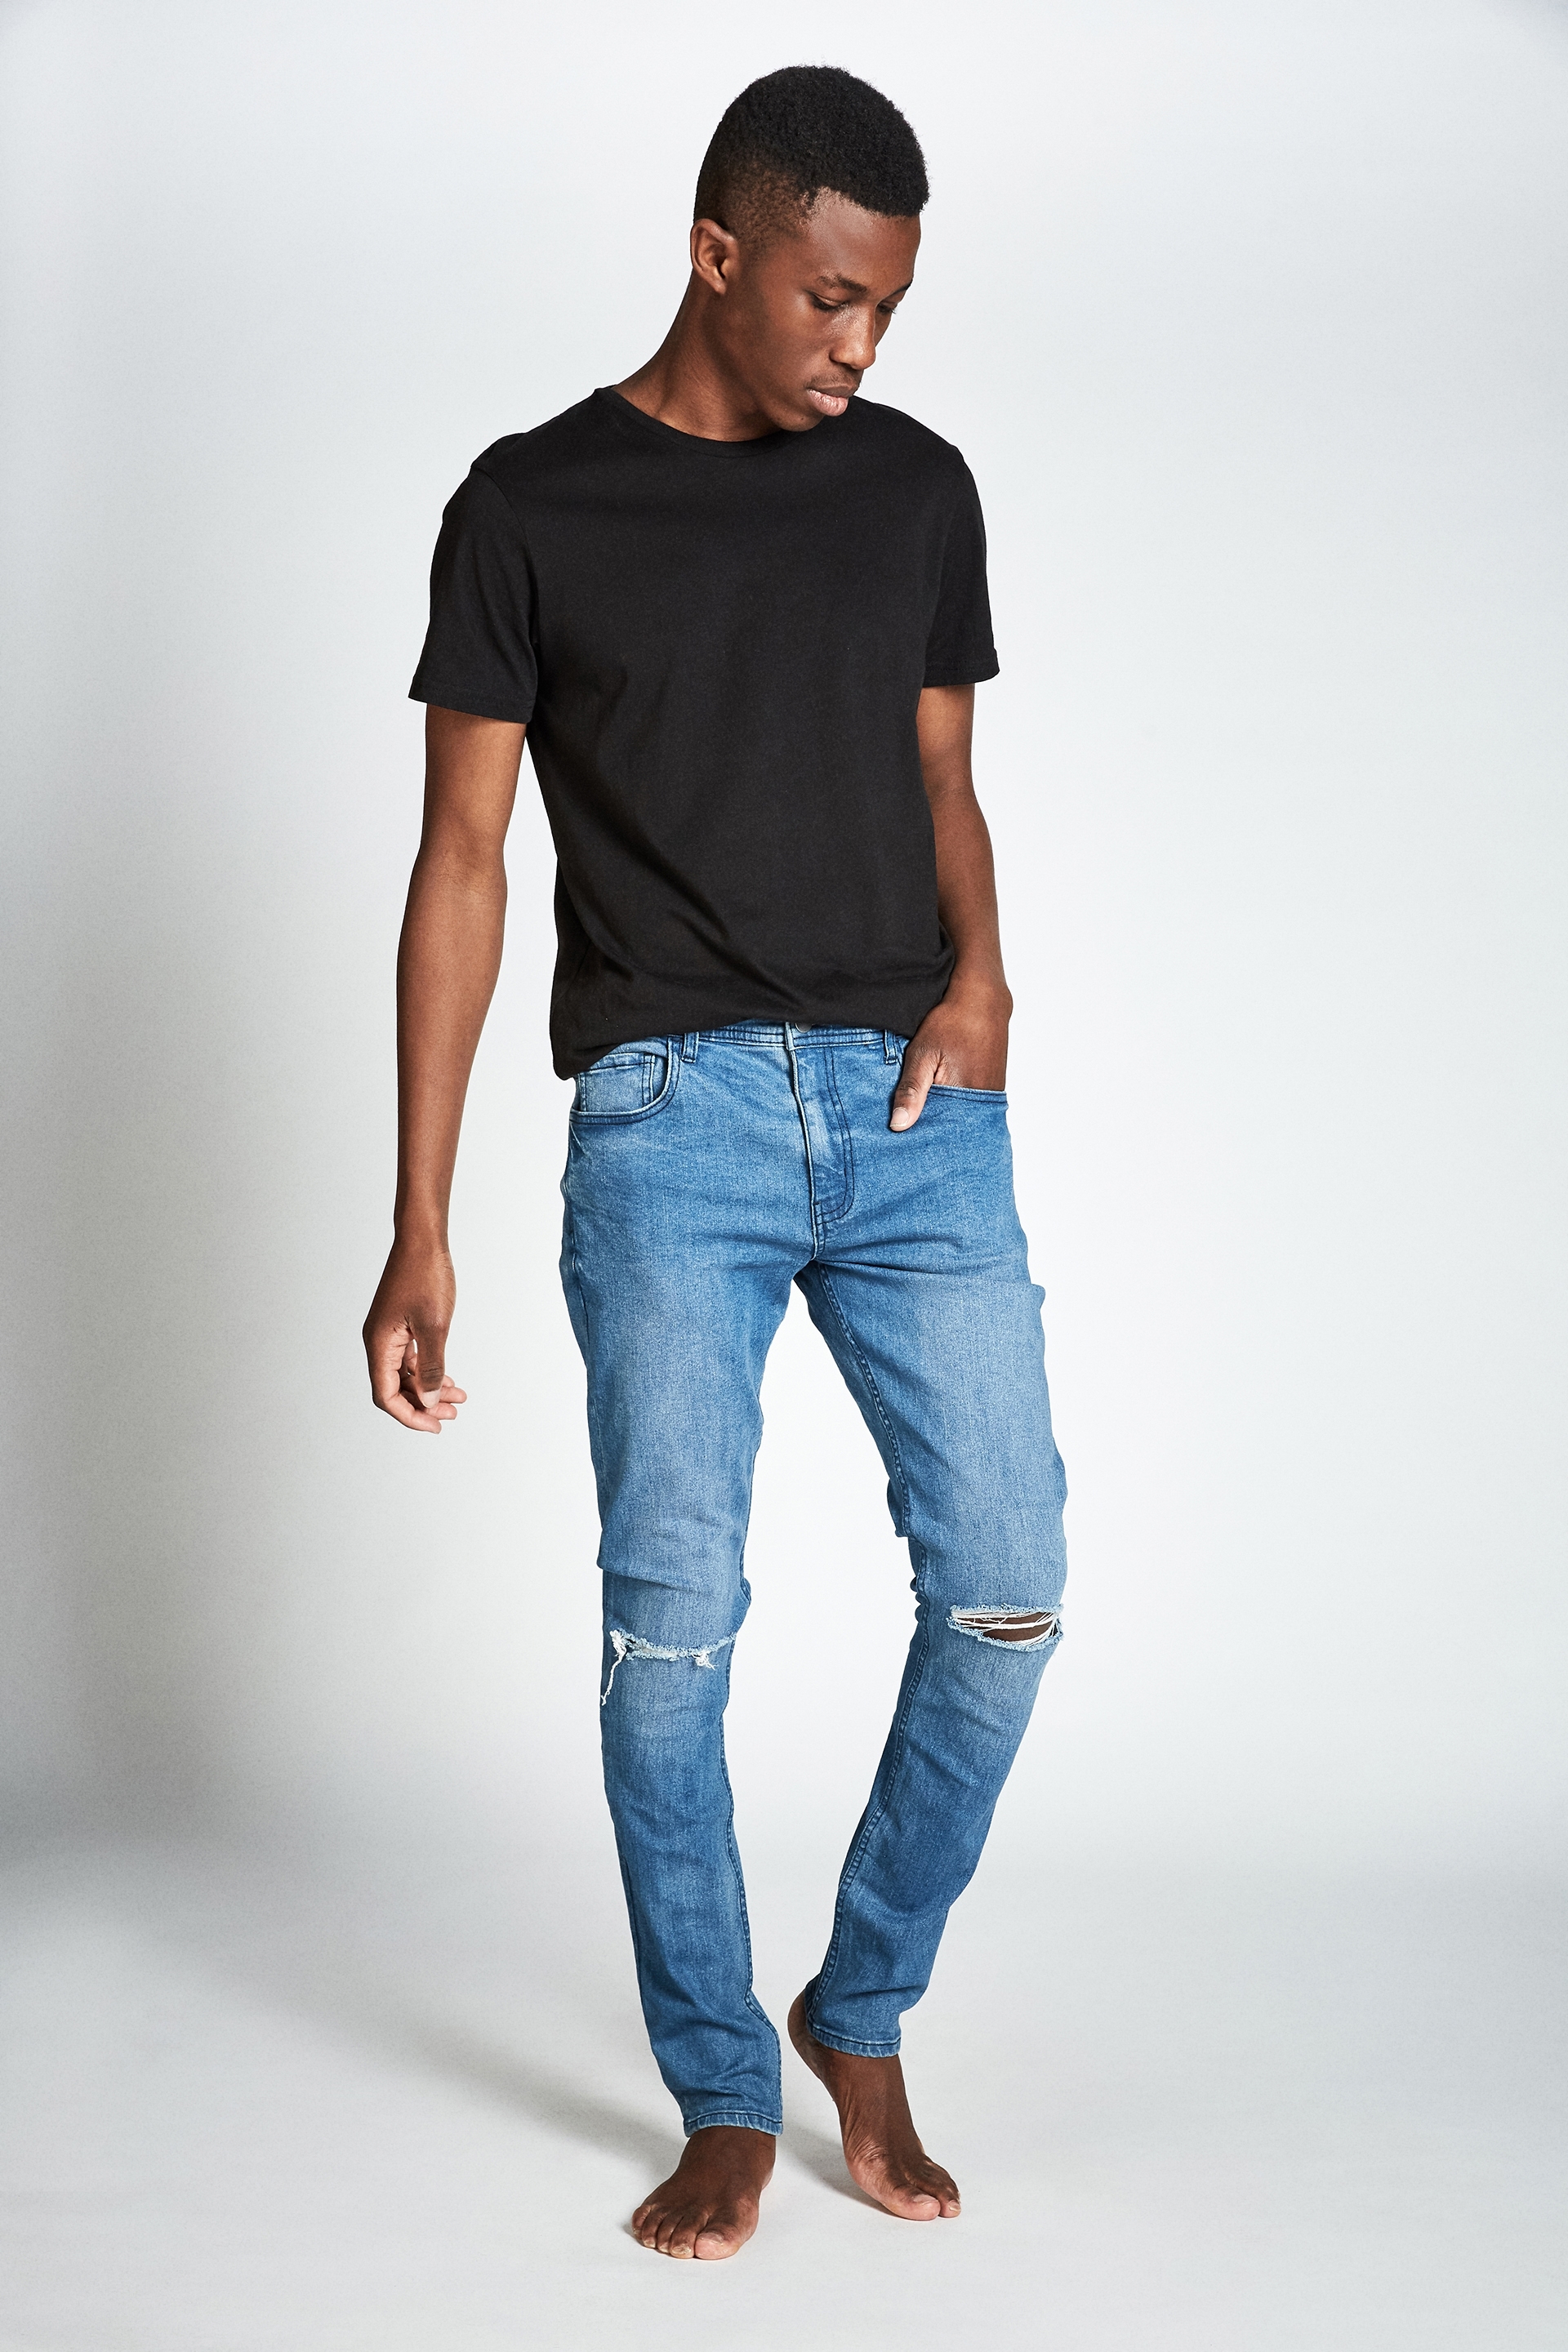 Cotton On Men - Super Skinny Jean - Laundry blue + rips